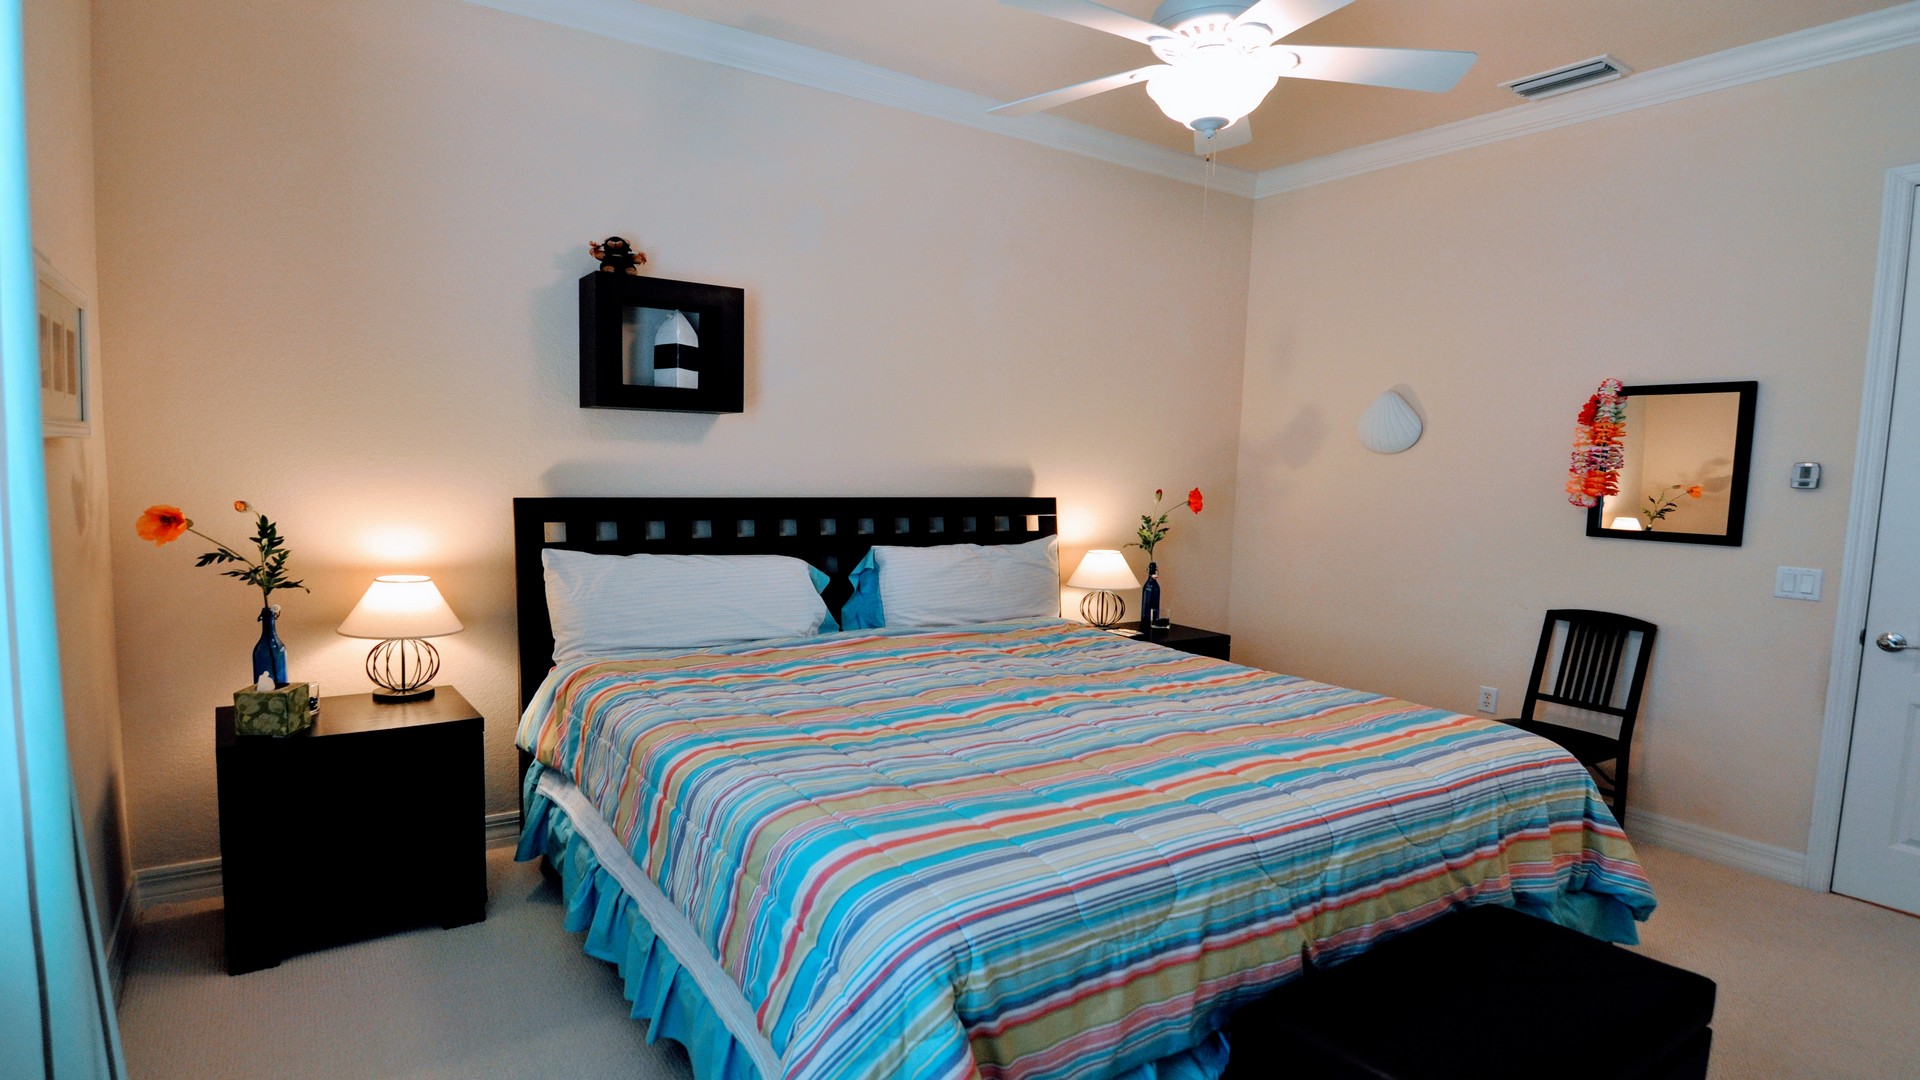 Der 2. Bedroom ebenfalls mit Kingsize Bett, TV und eigenem Bad